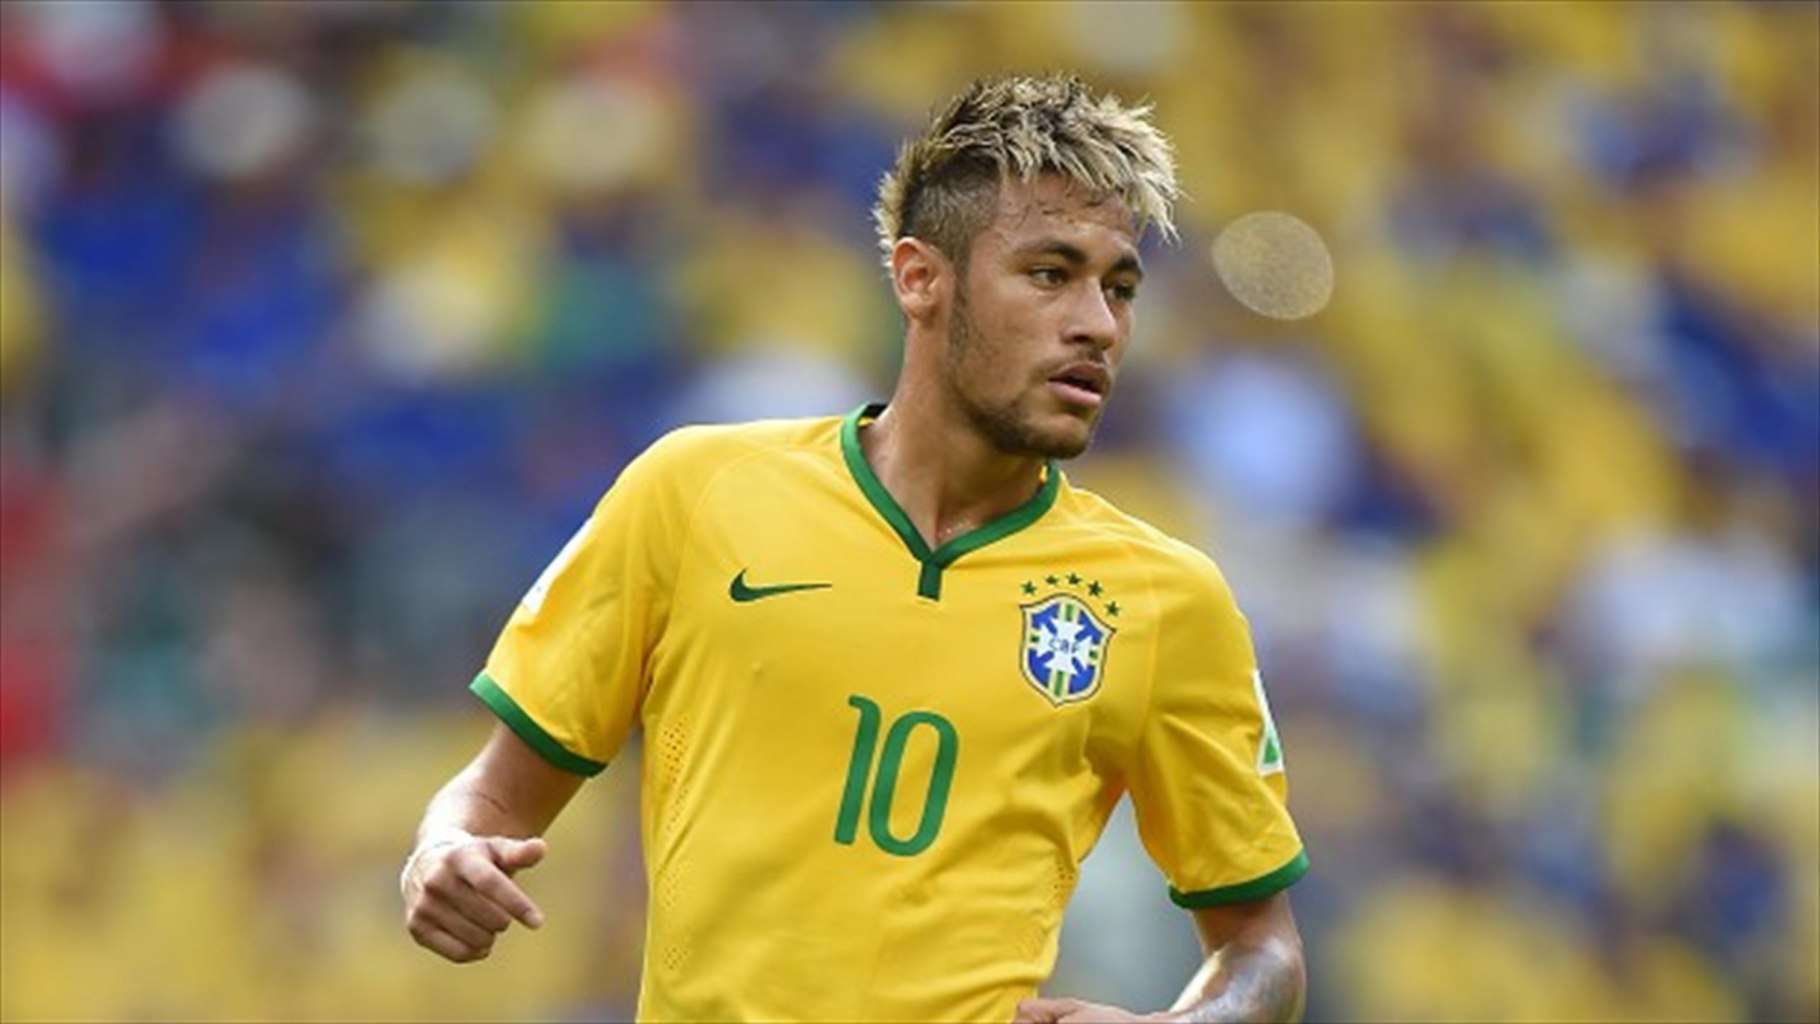 Brazil Neymar HD Image Wallpaper